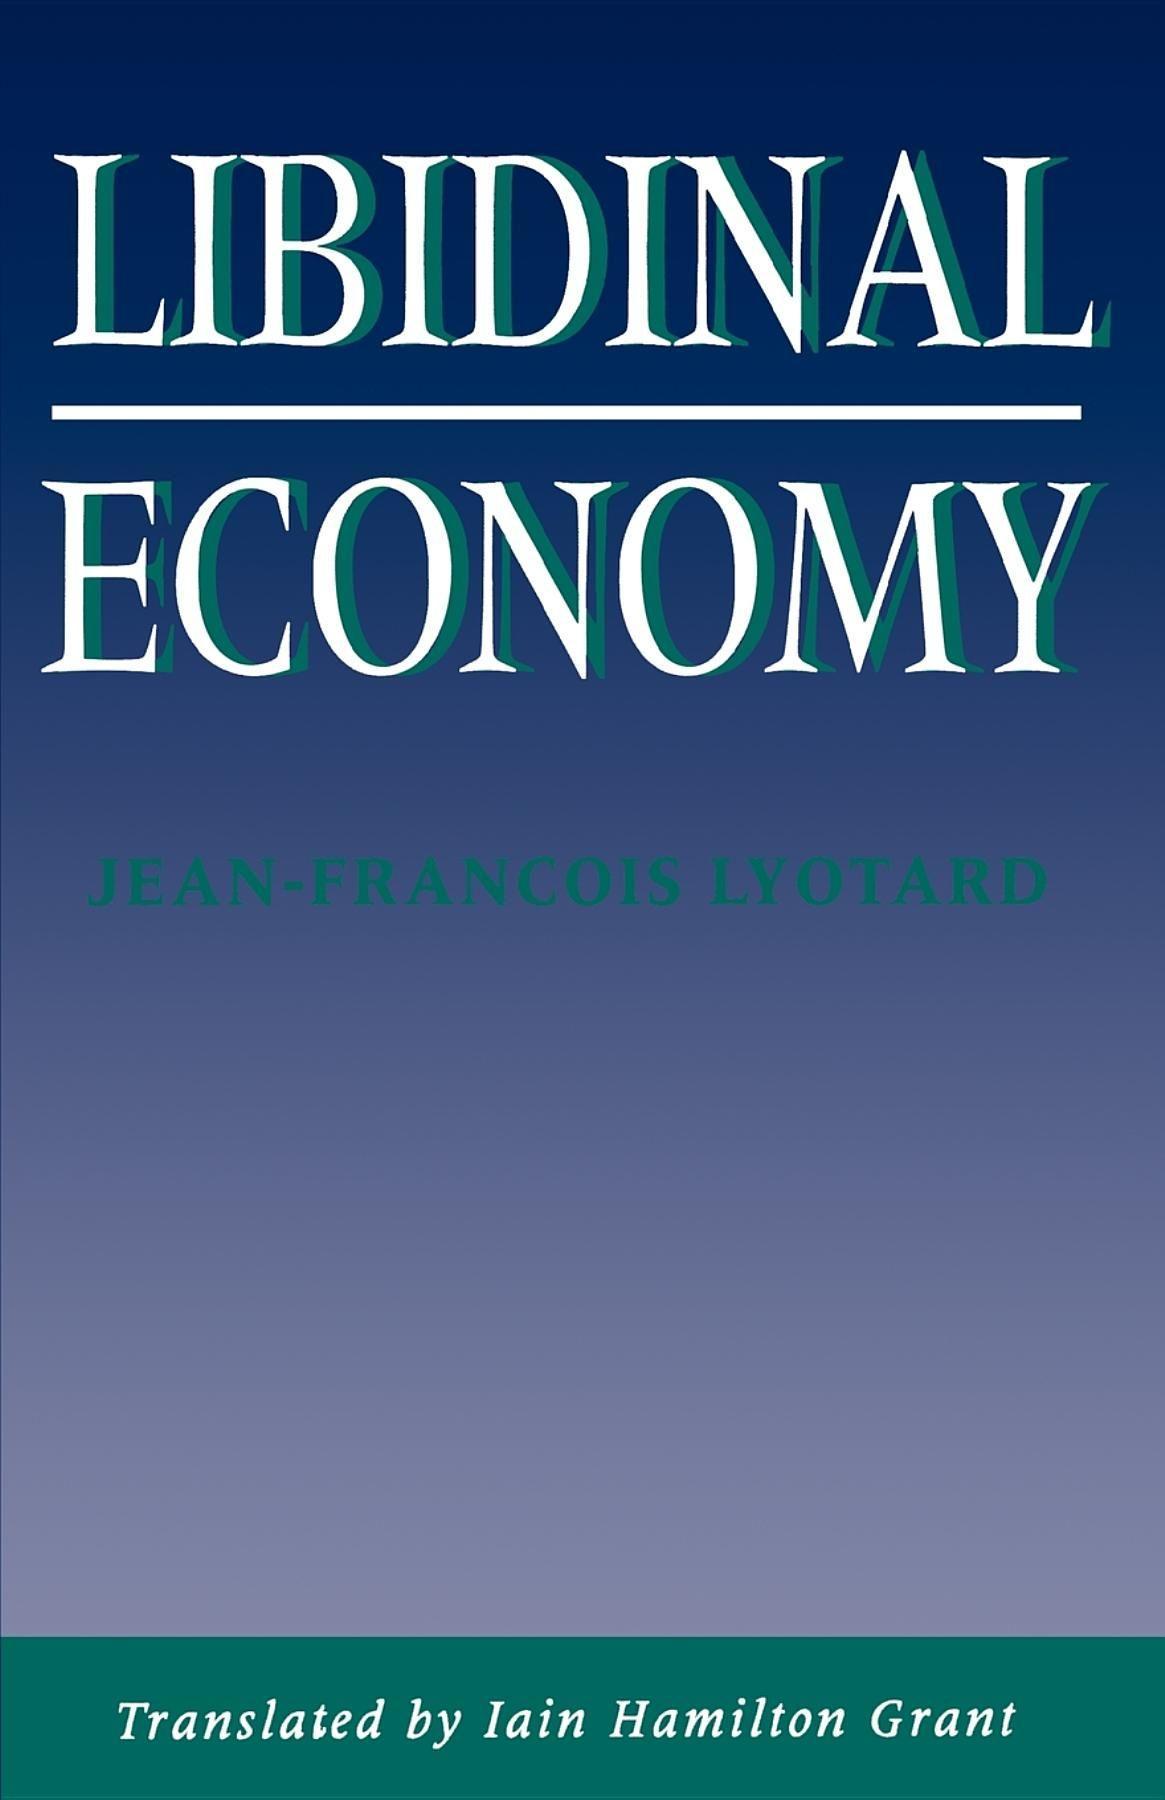 Libidinal Economy - Lyotard, Jean-Francois